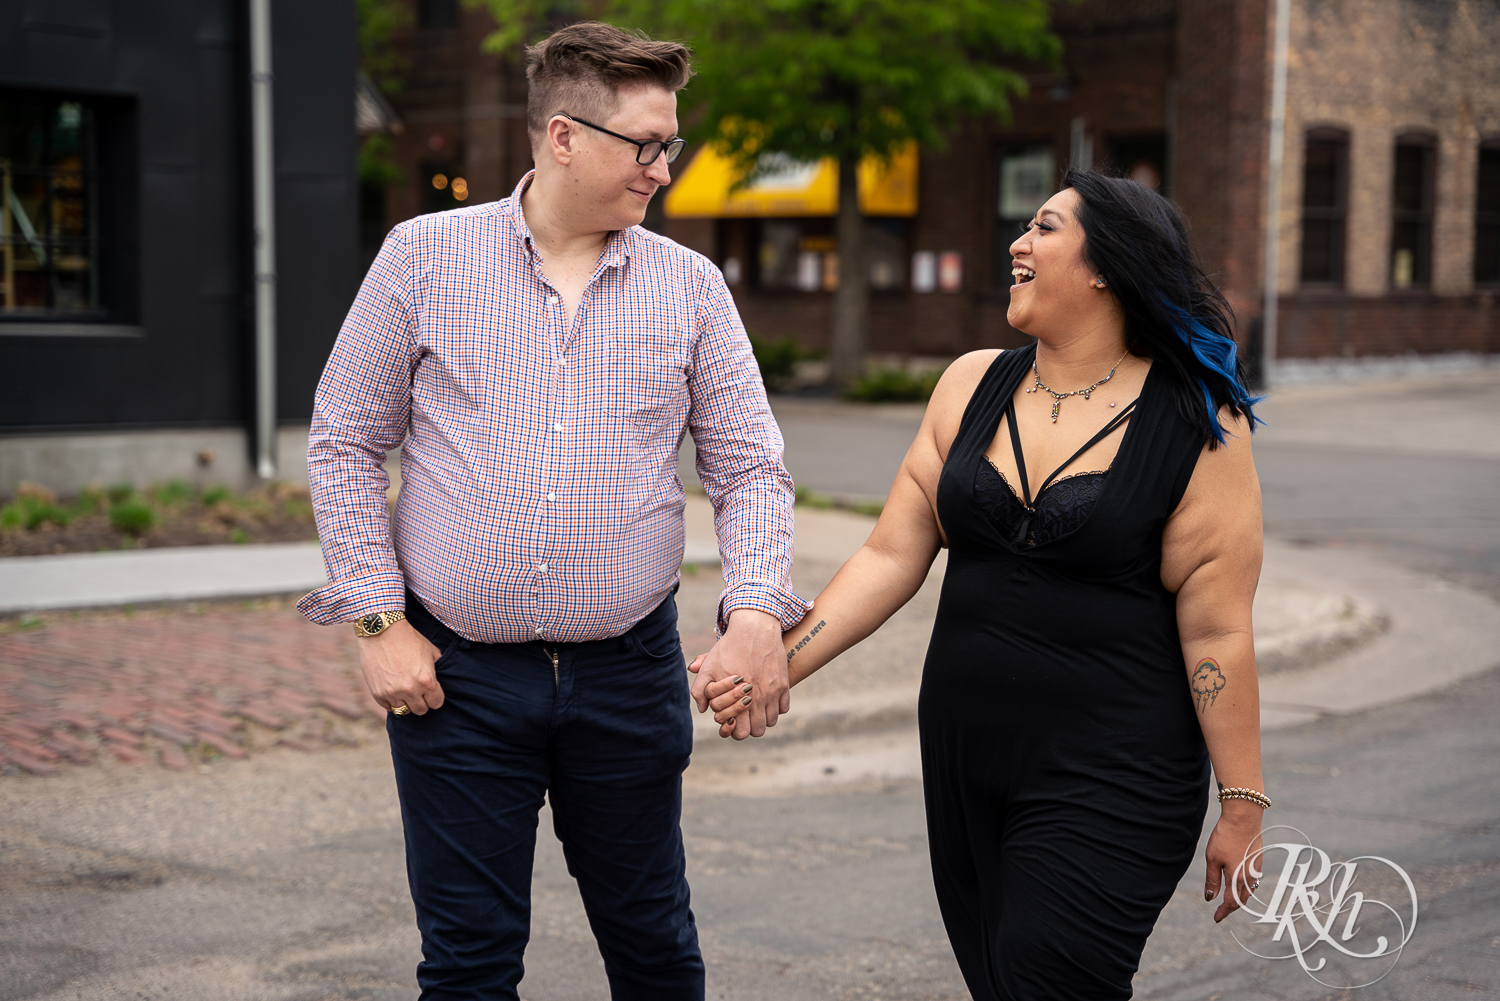 Man and Filipino woman walk down street laughing in Minneapolis, Minnesota.